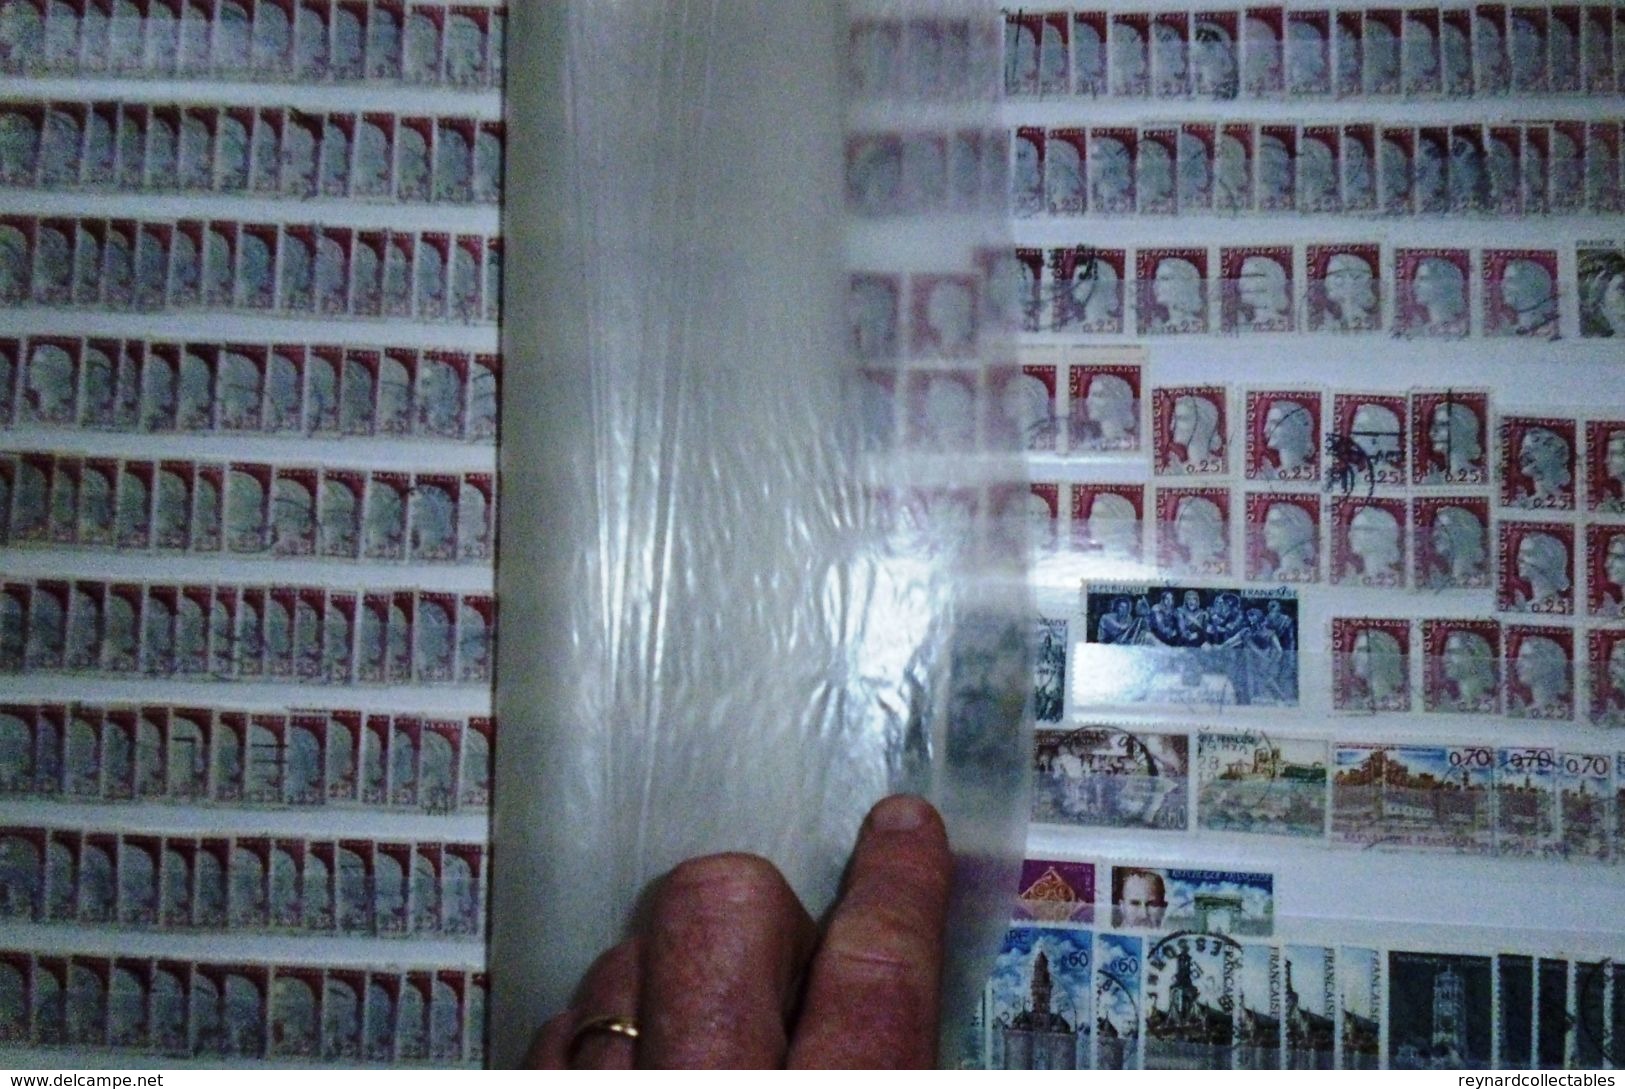 France huge stamp sorter 1000s,S/Books,album, loose,philatelic document,Red Cross/Anti TB booklets